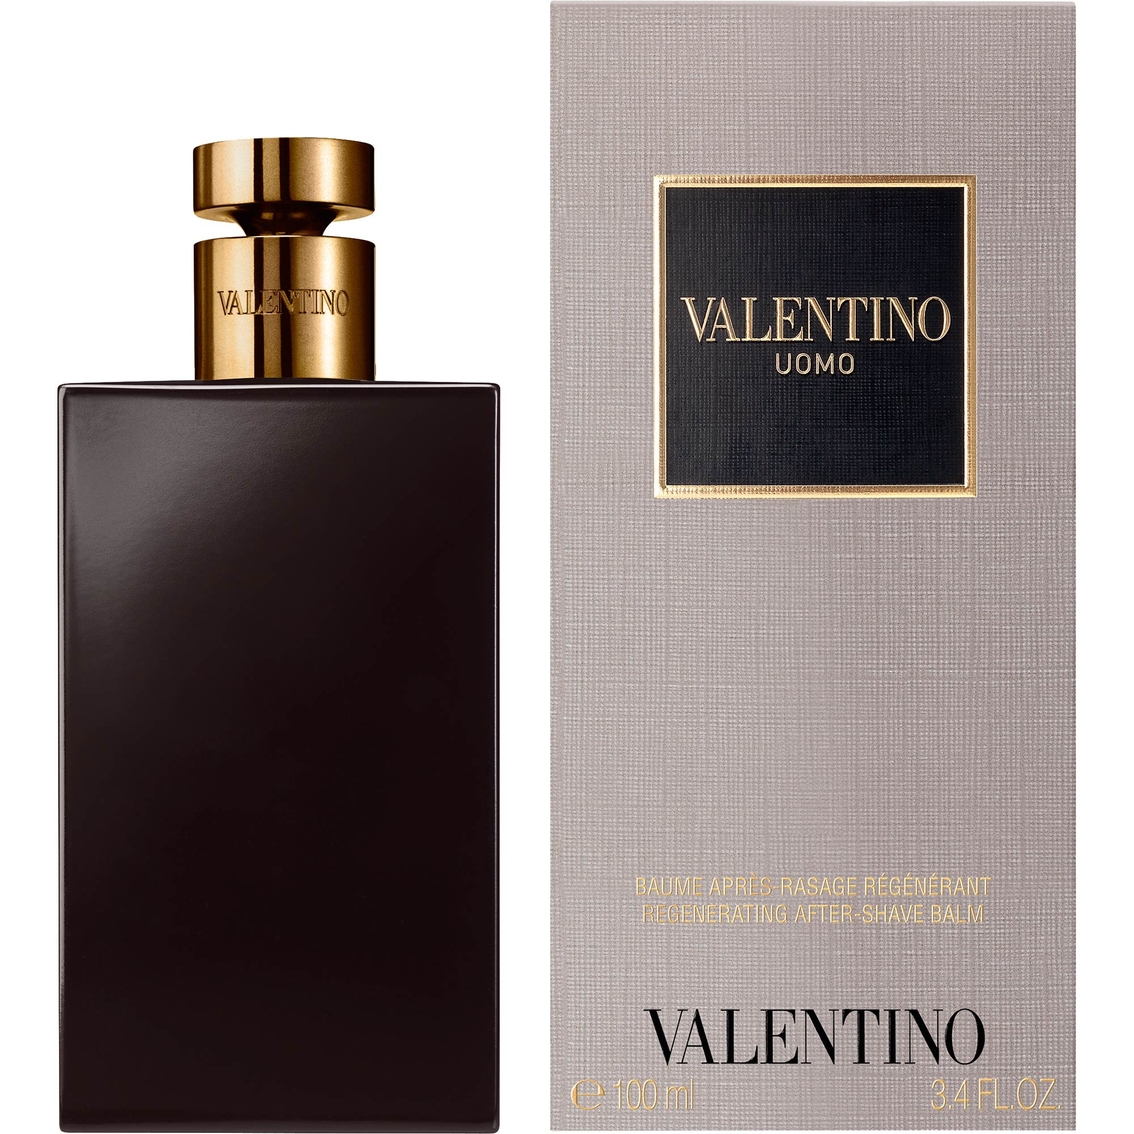 Slagskib Smigre gaben Valentino Uomo Aftershave Balm | Men's Fragrances | Beauty & Health | Shop  The Exchange